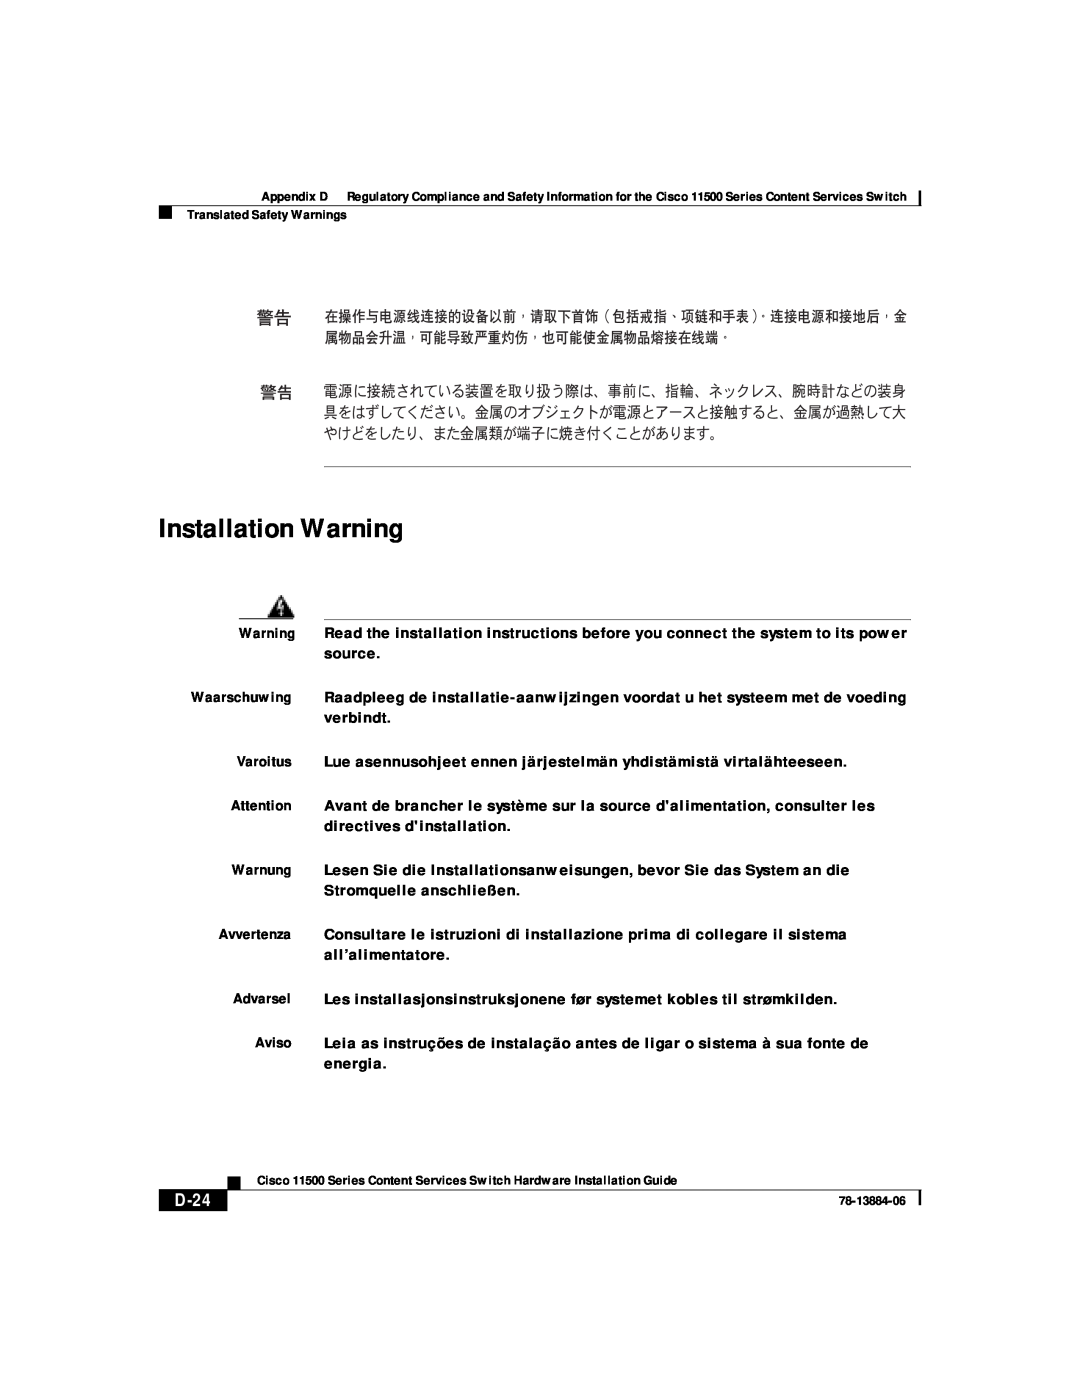 Cisco Systems 11500 Series manual Installation Warning, D-24 